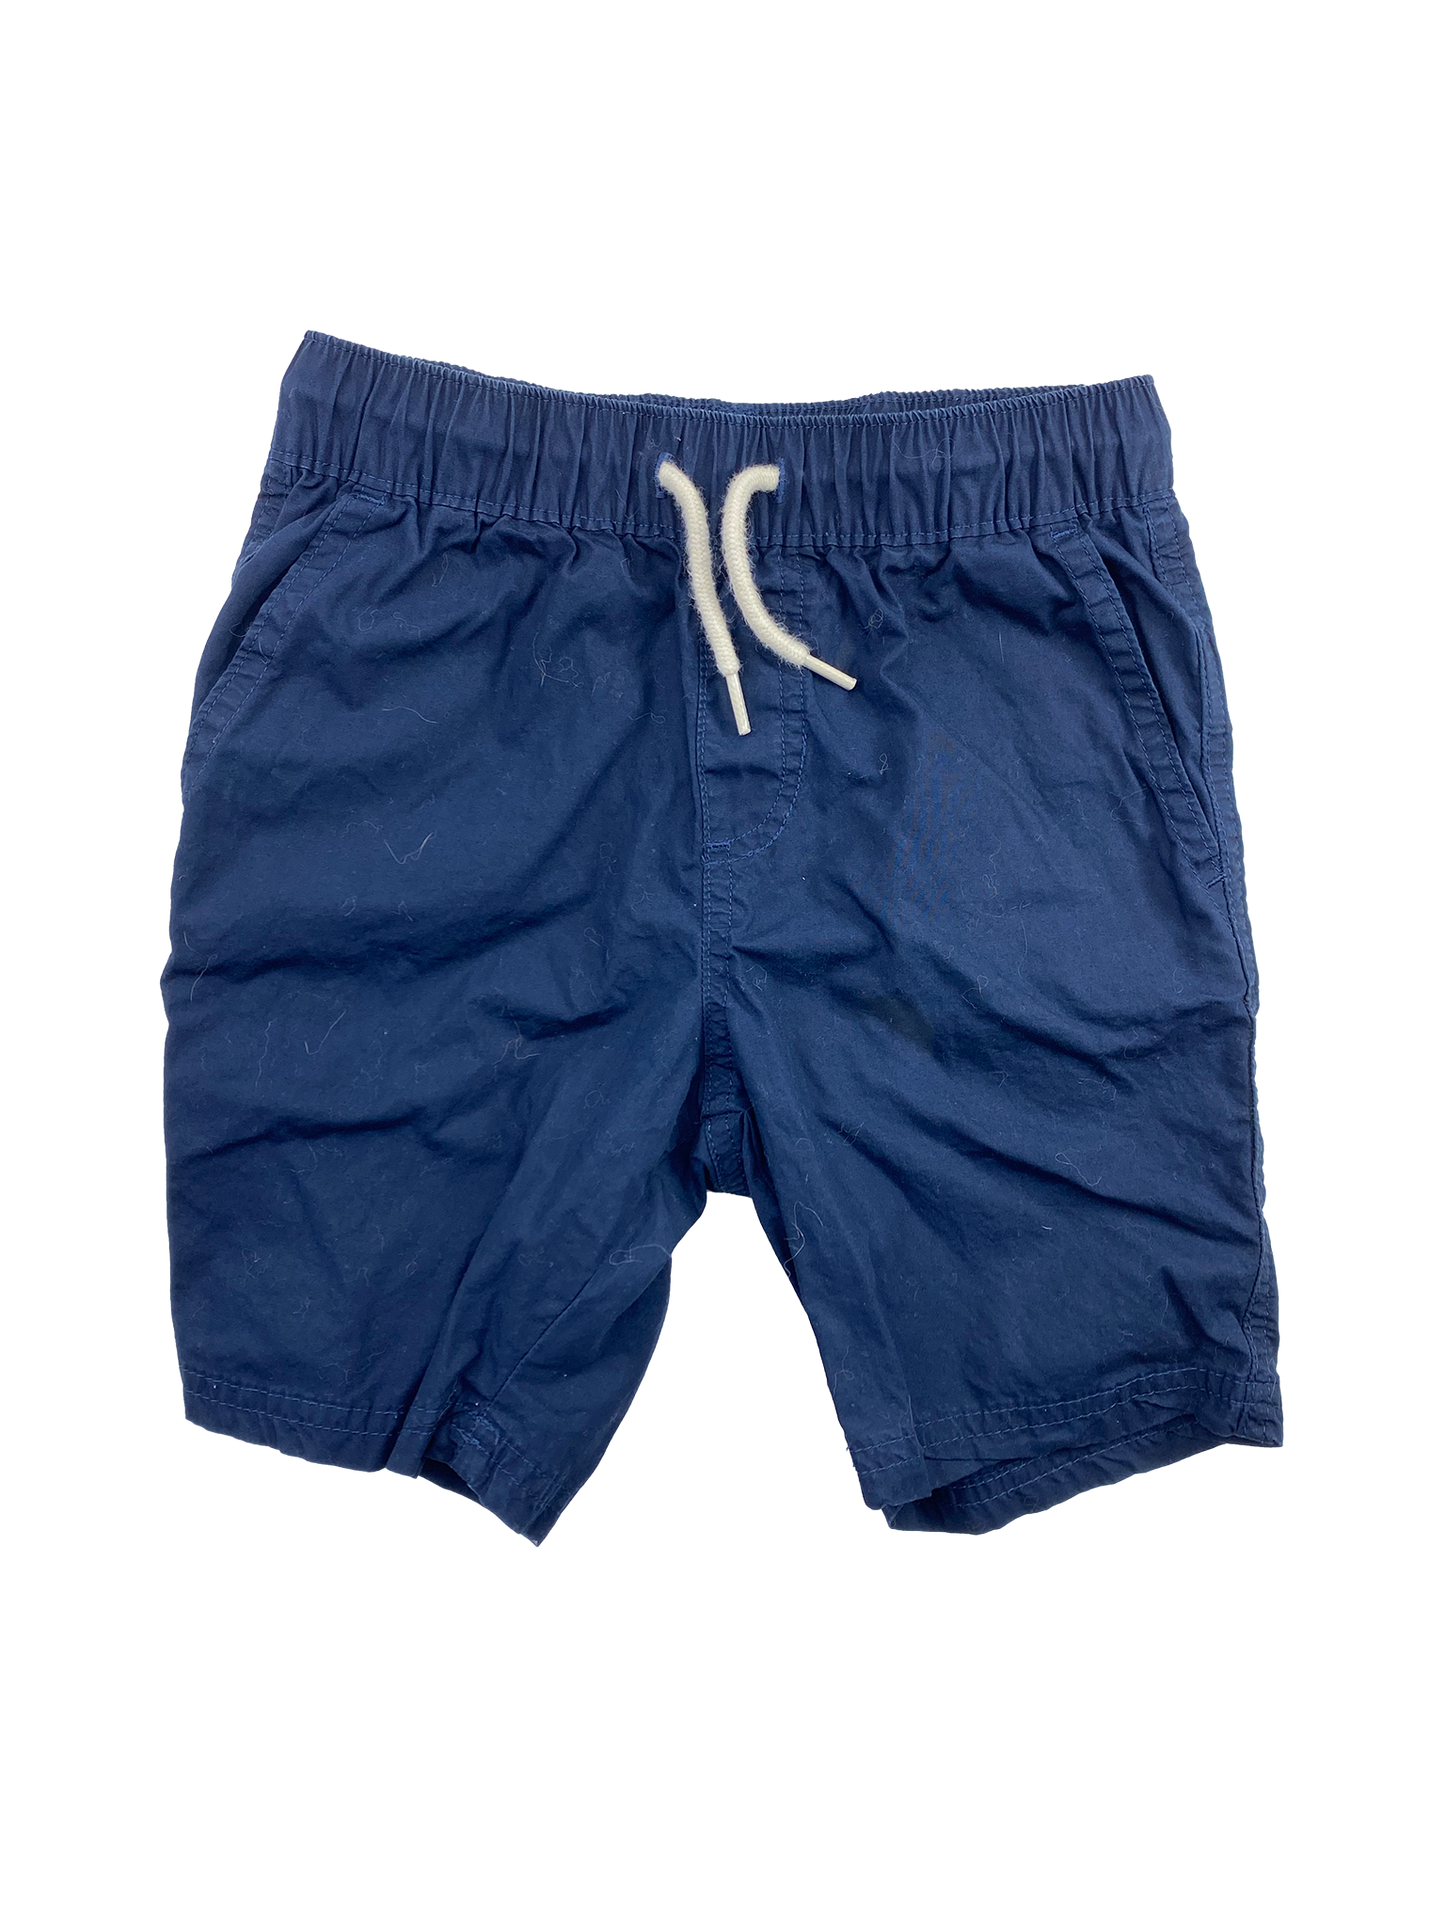 Old Navy Navy Shorts 5T